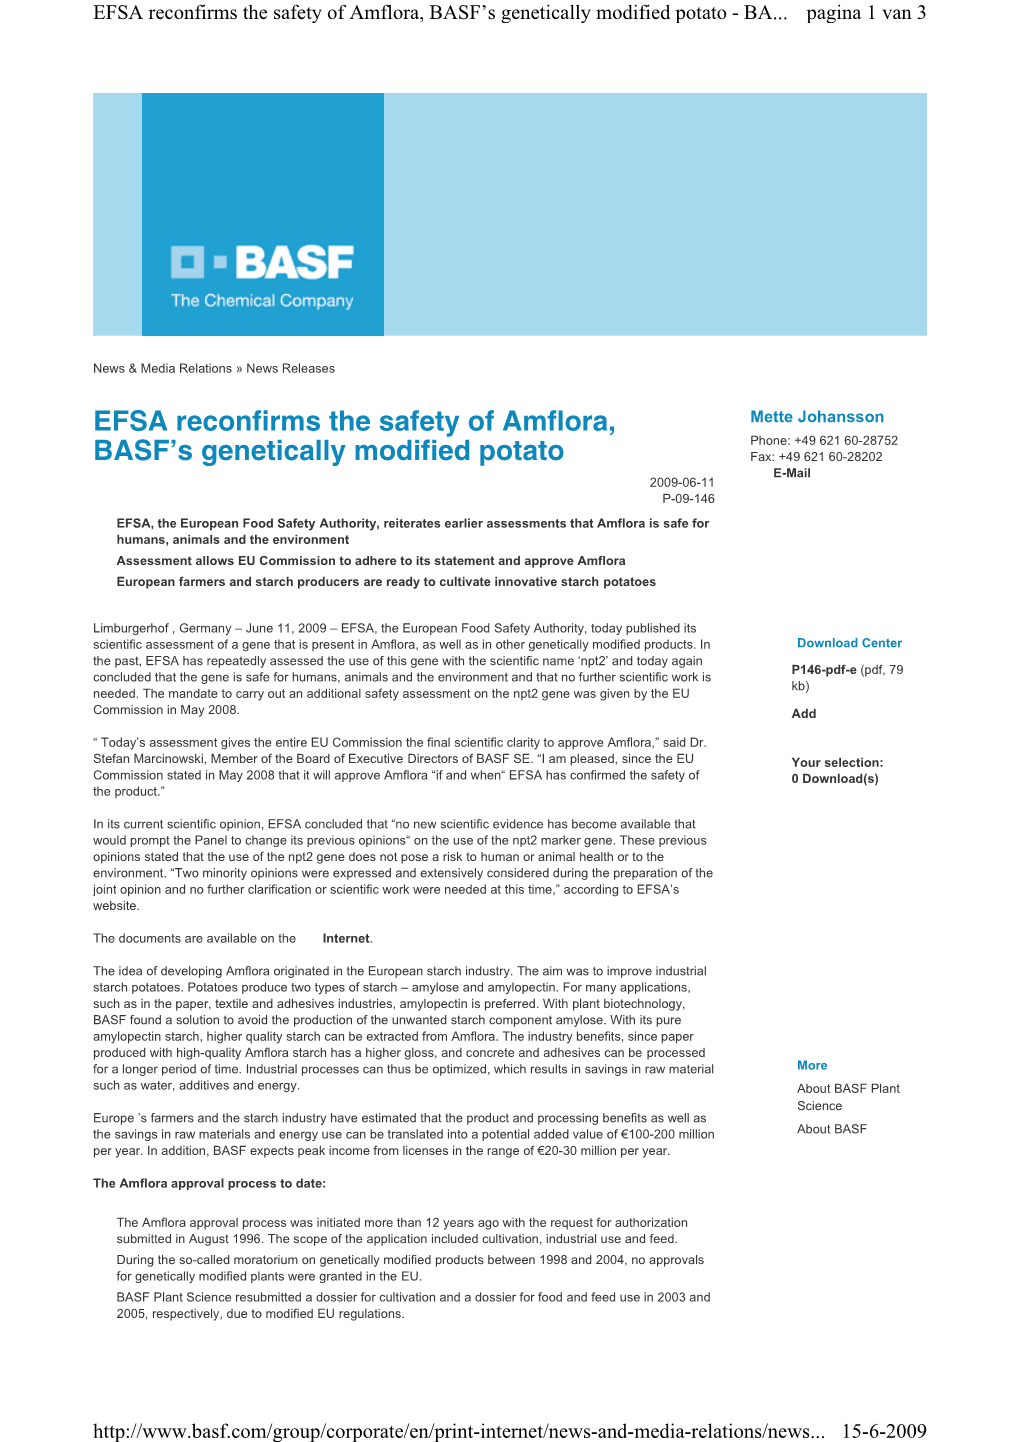 EFSA Reconfirms the Safety of Amflora, BASF's Genetically Modified Potato